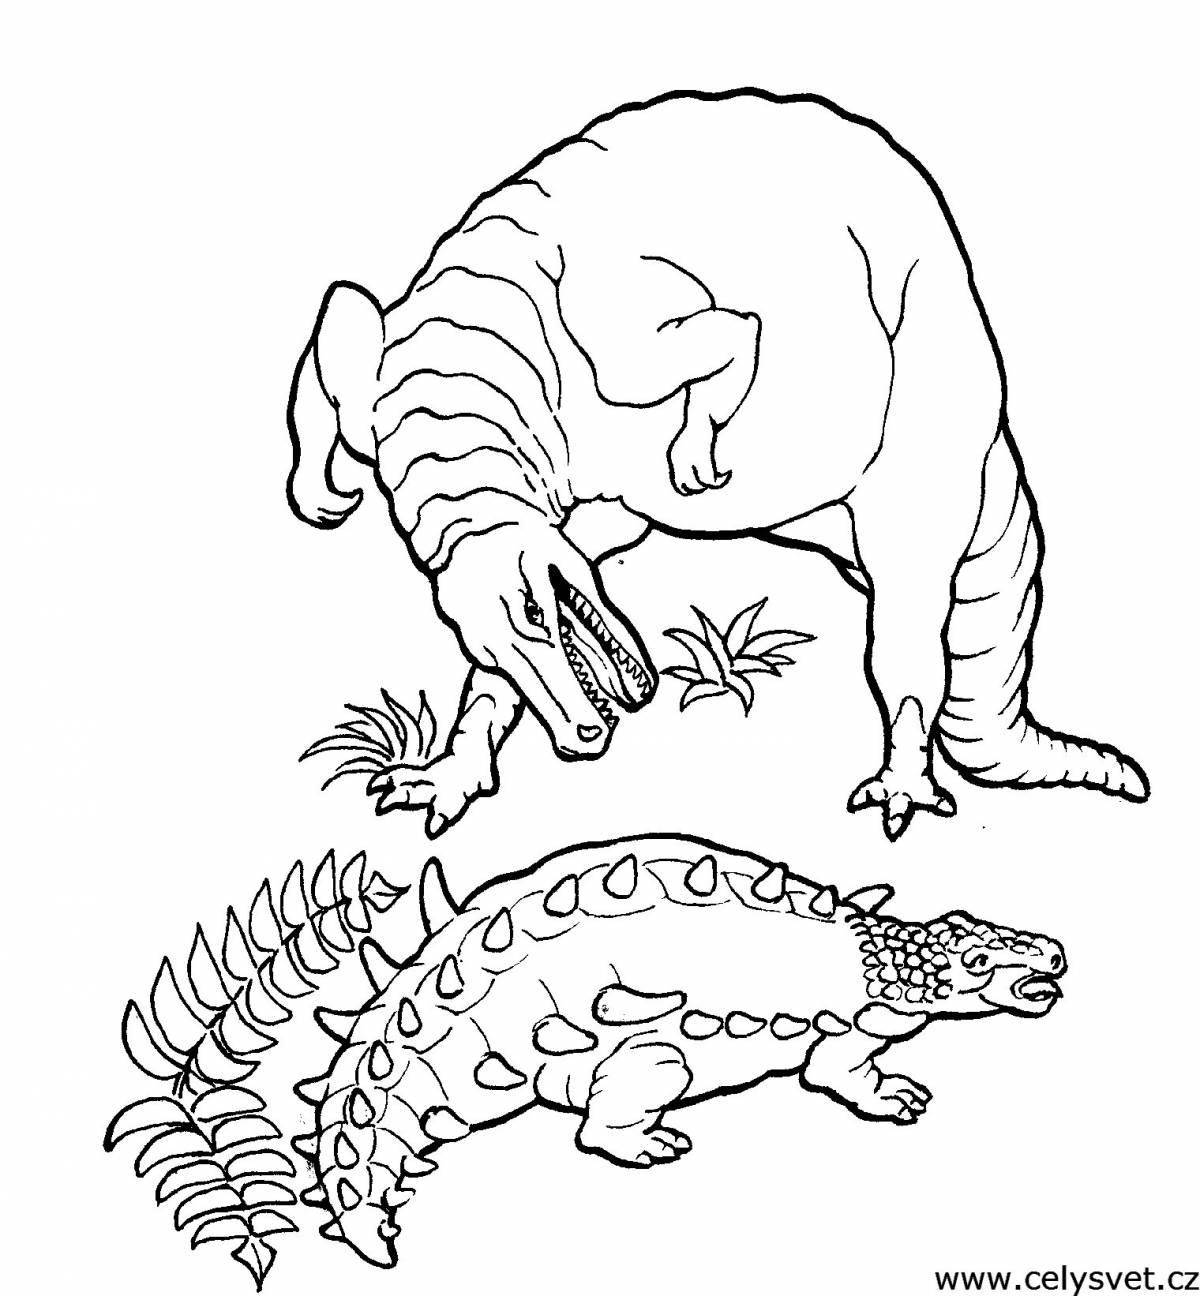 Ankylosaurus fun coloring book for kids